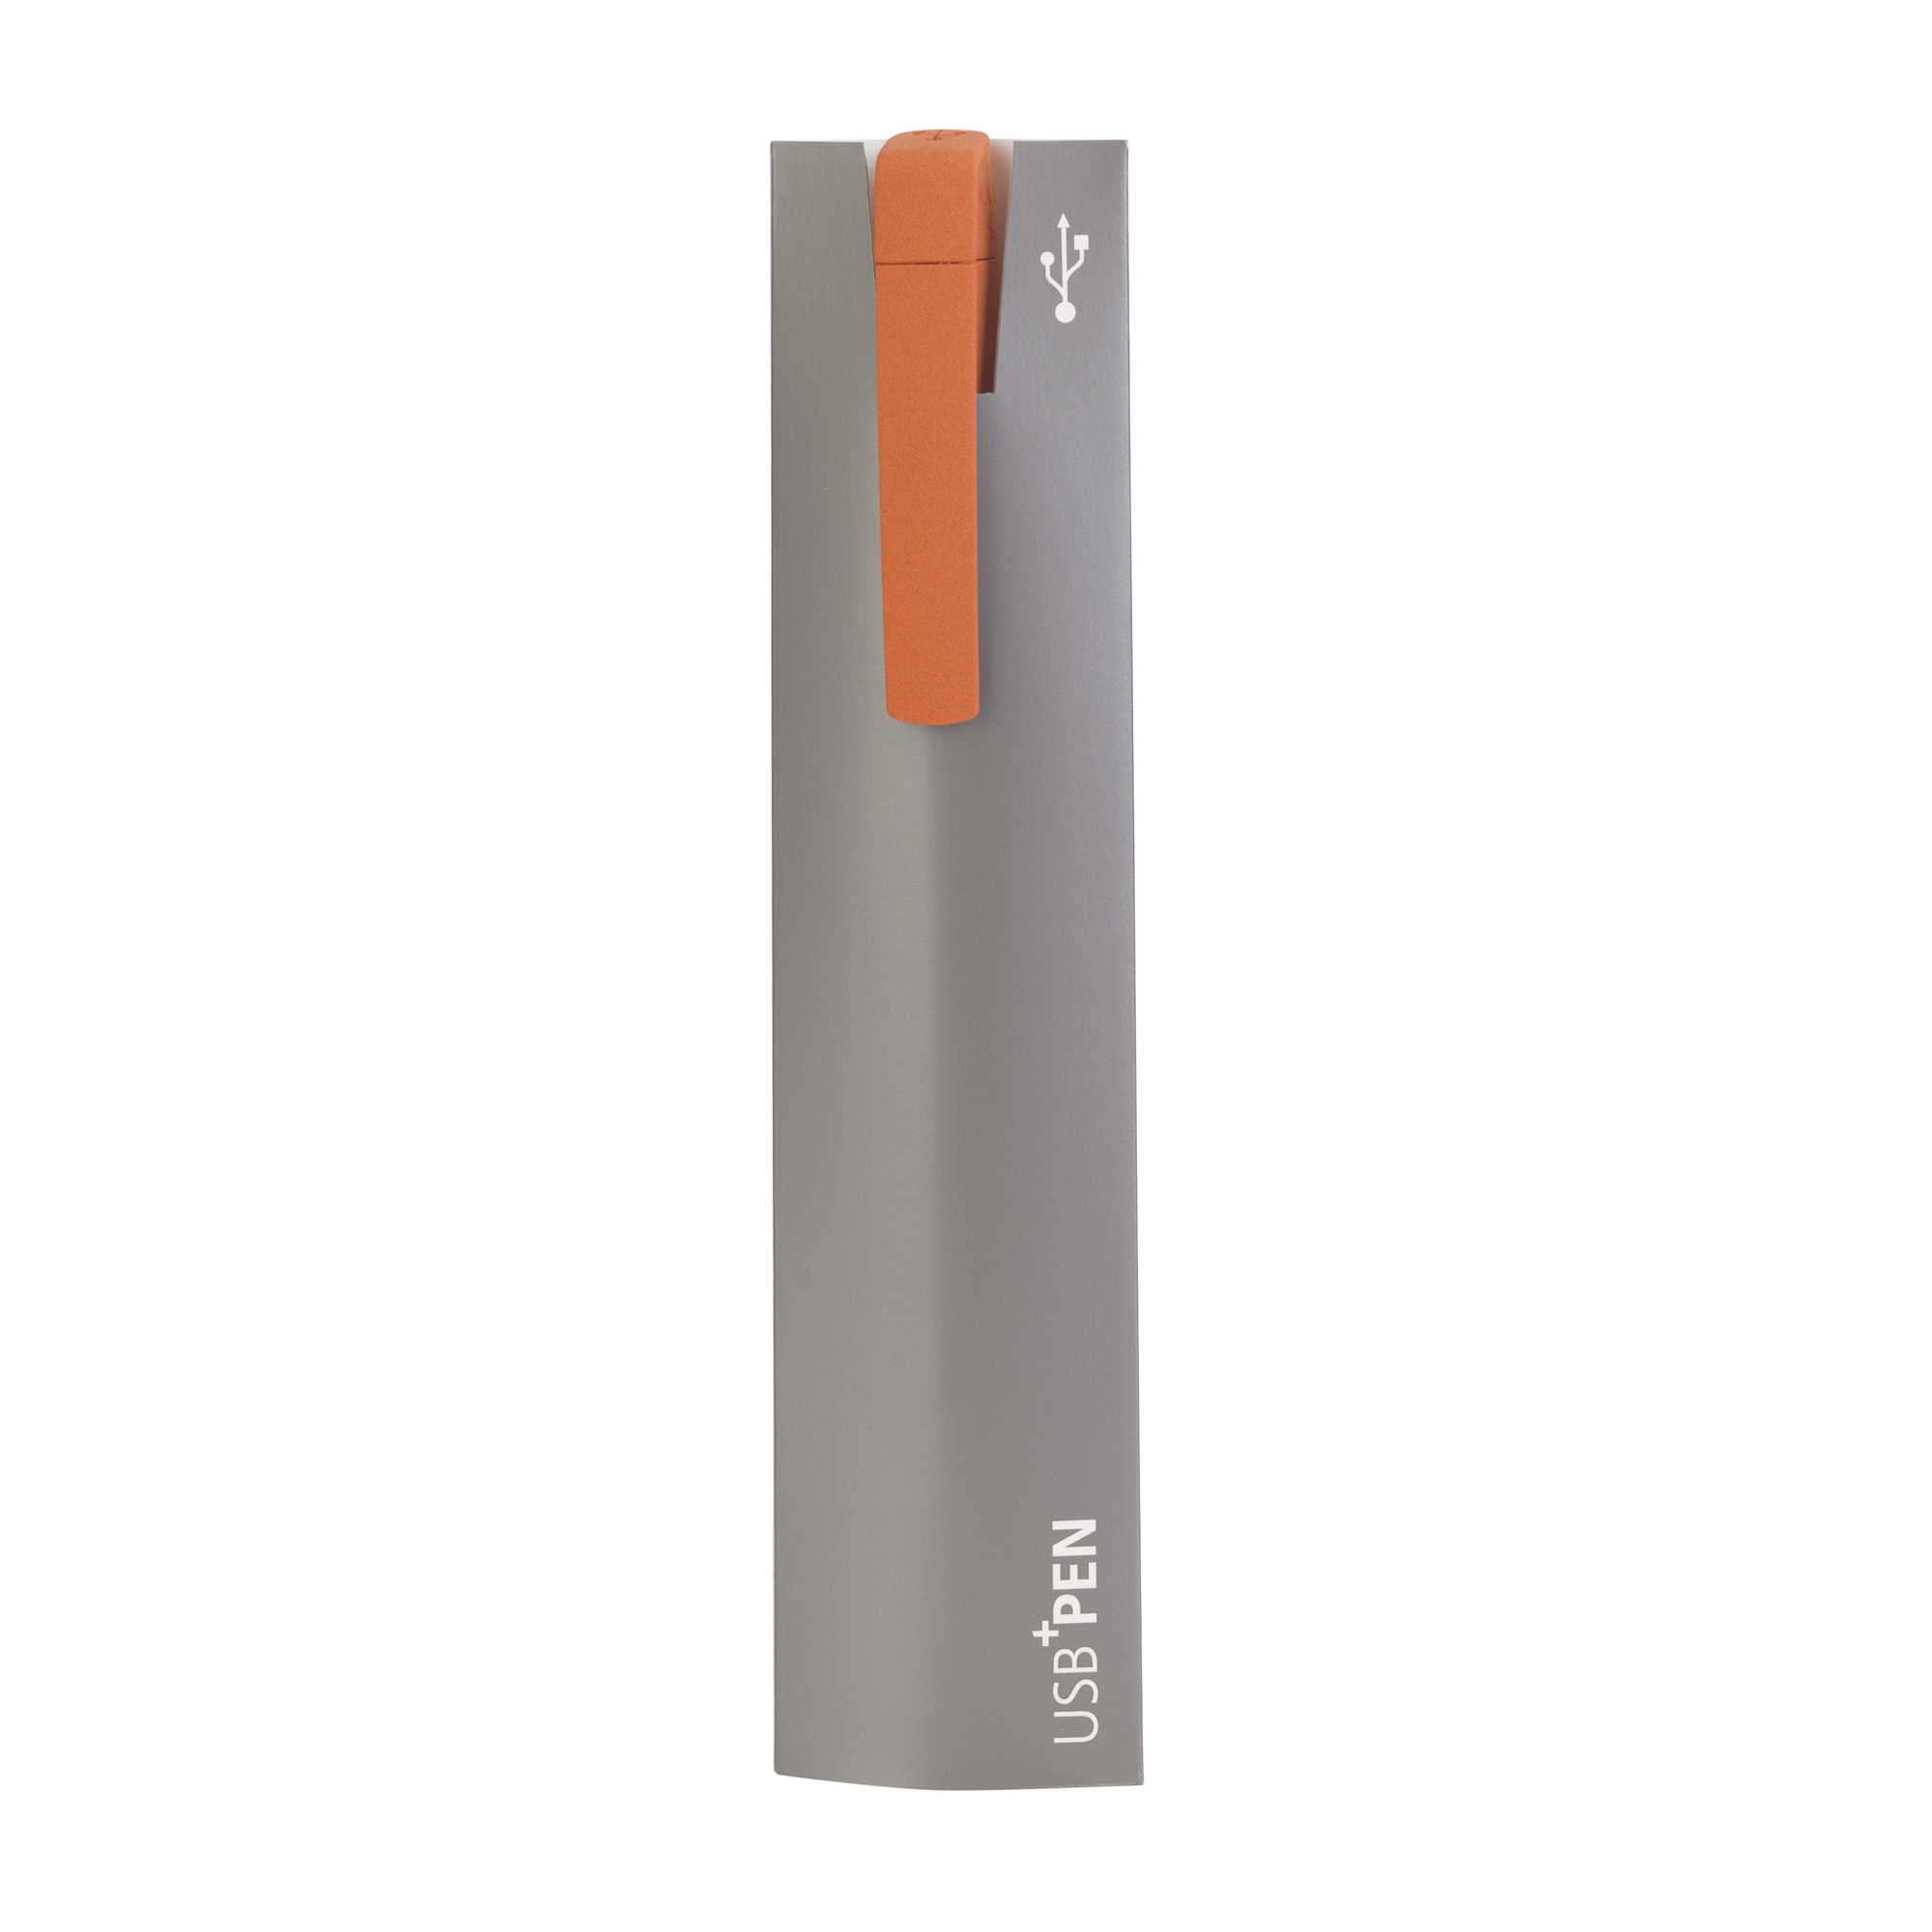 Ручка с флеш-картой USB 8GB «TURNUSsoftgrip M», оранжевый, пластик/soft grip/металл